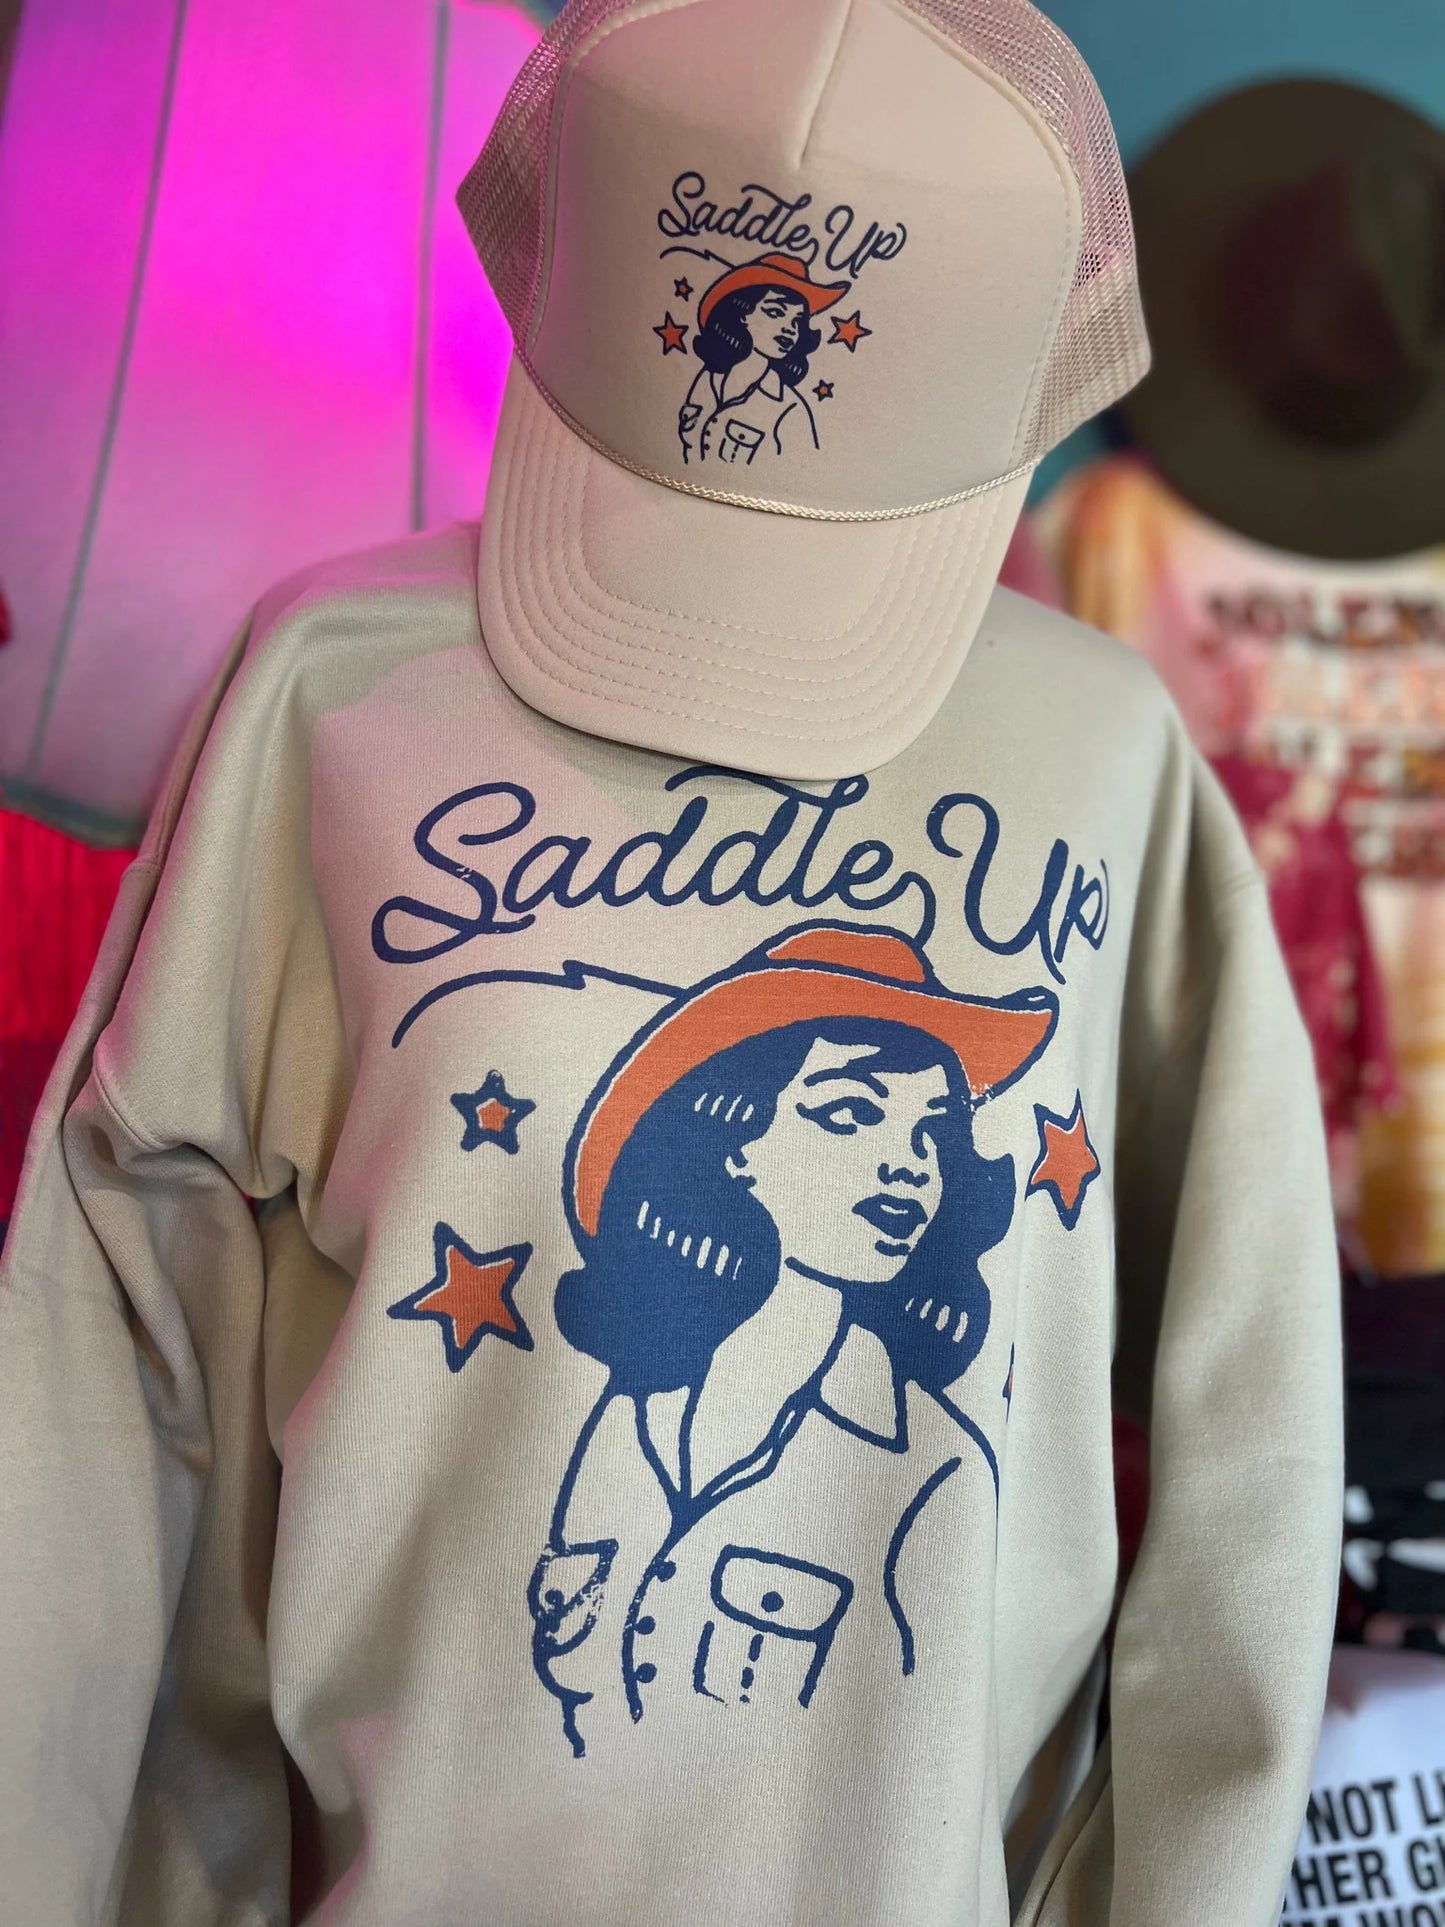 Saddle Up Vintage - Sweatshirt or T-shirt